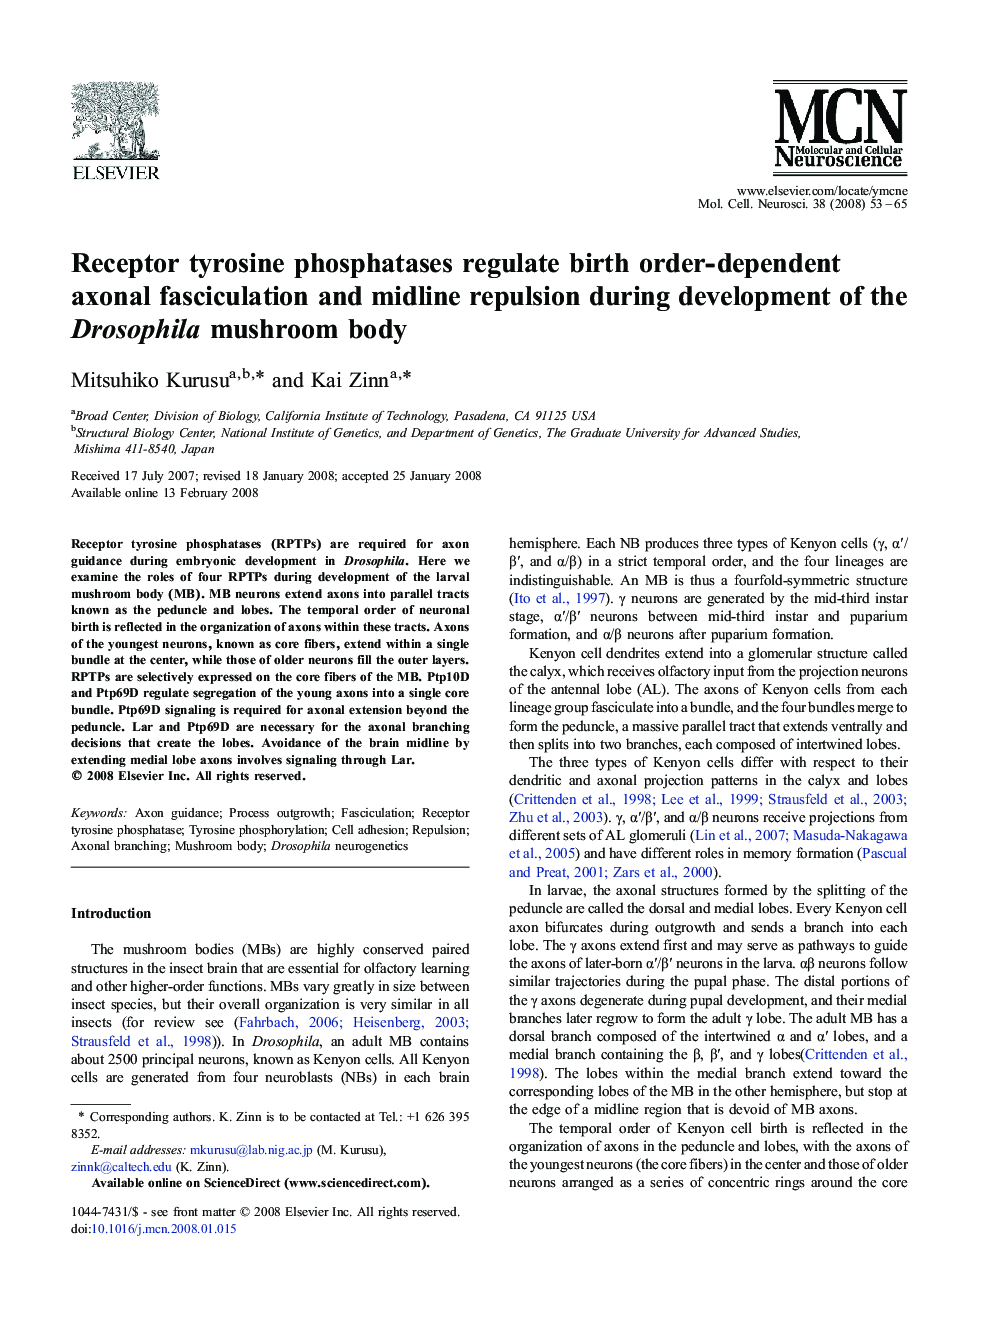 Receptor tyrosine phosphatases regulate birth order-dependent axonal fasciculation and midline repulsion during development of the Drosophila mushroom body